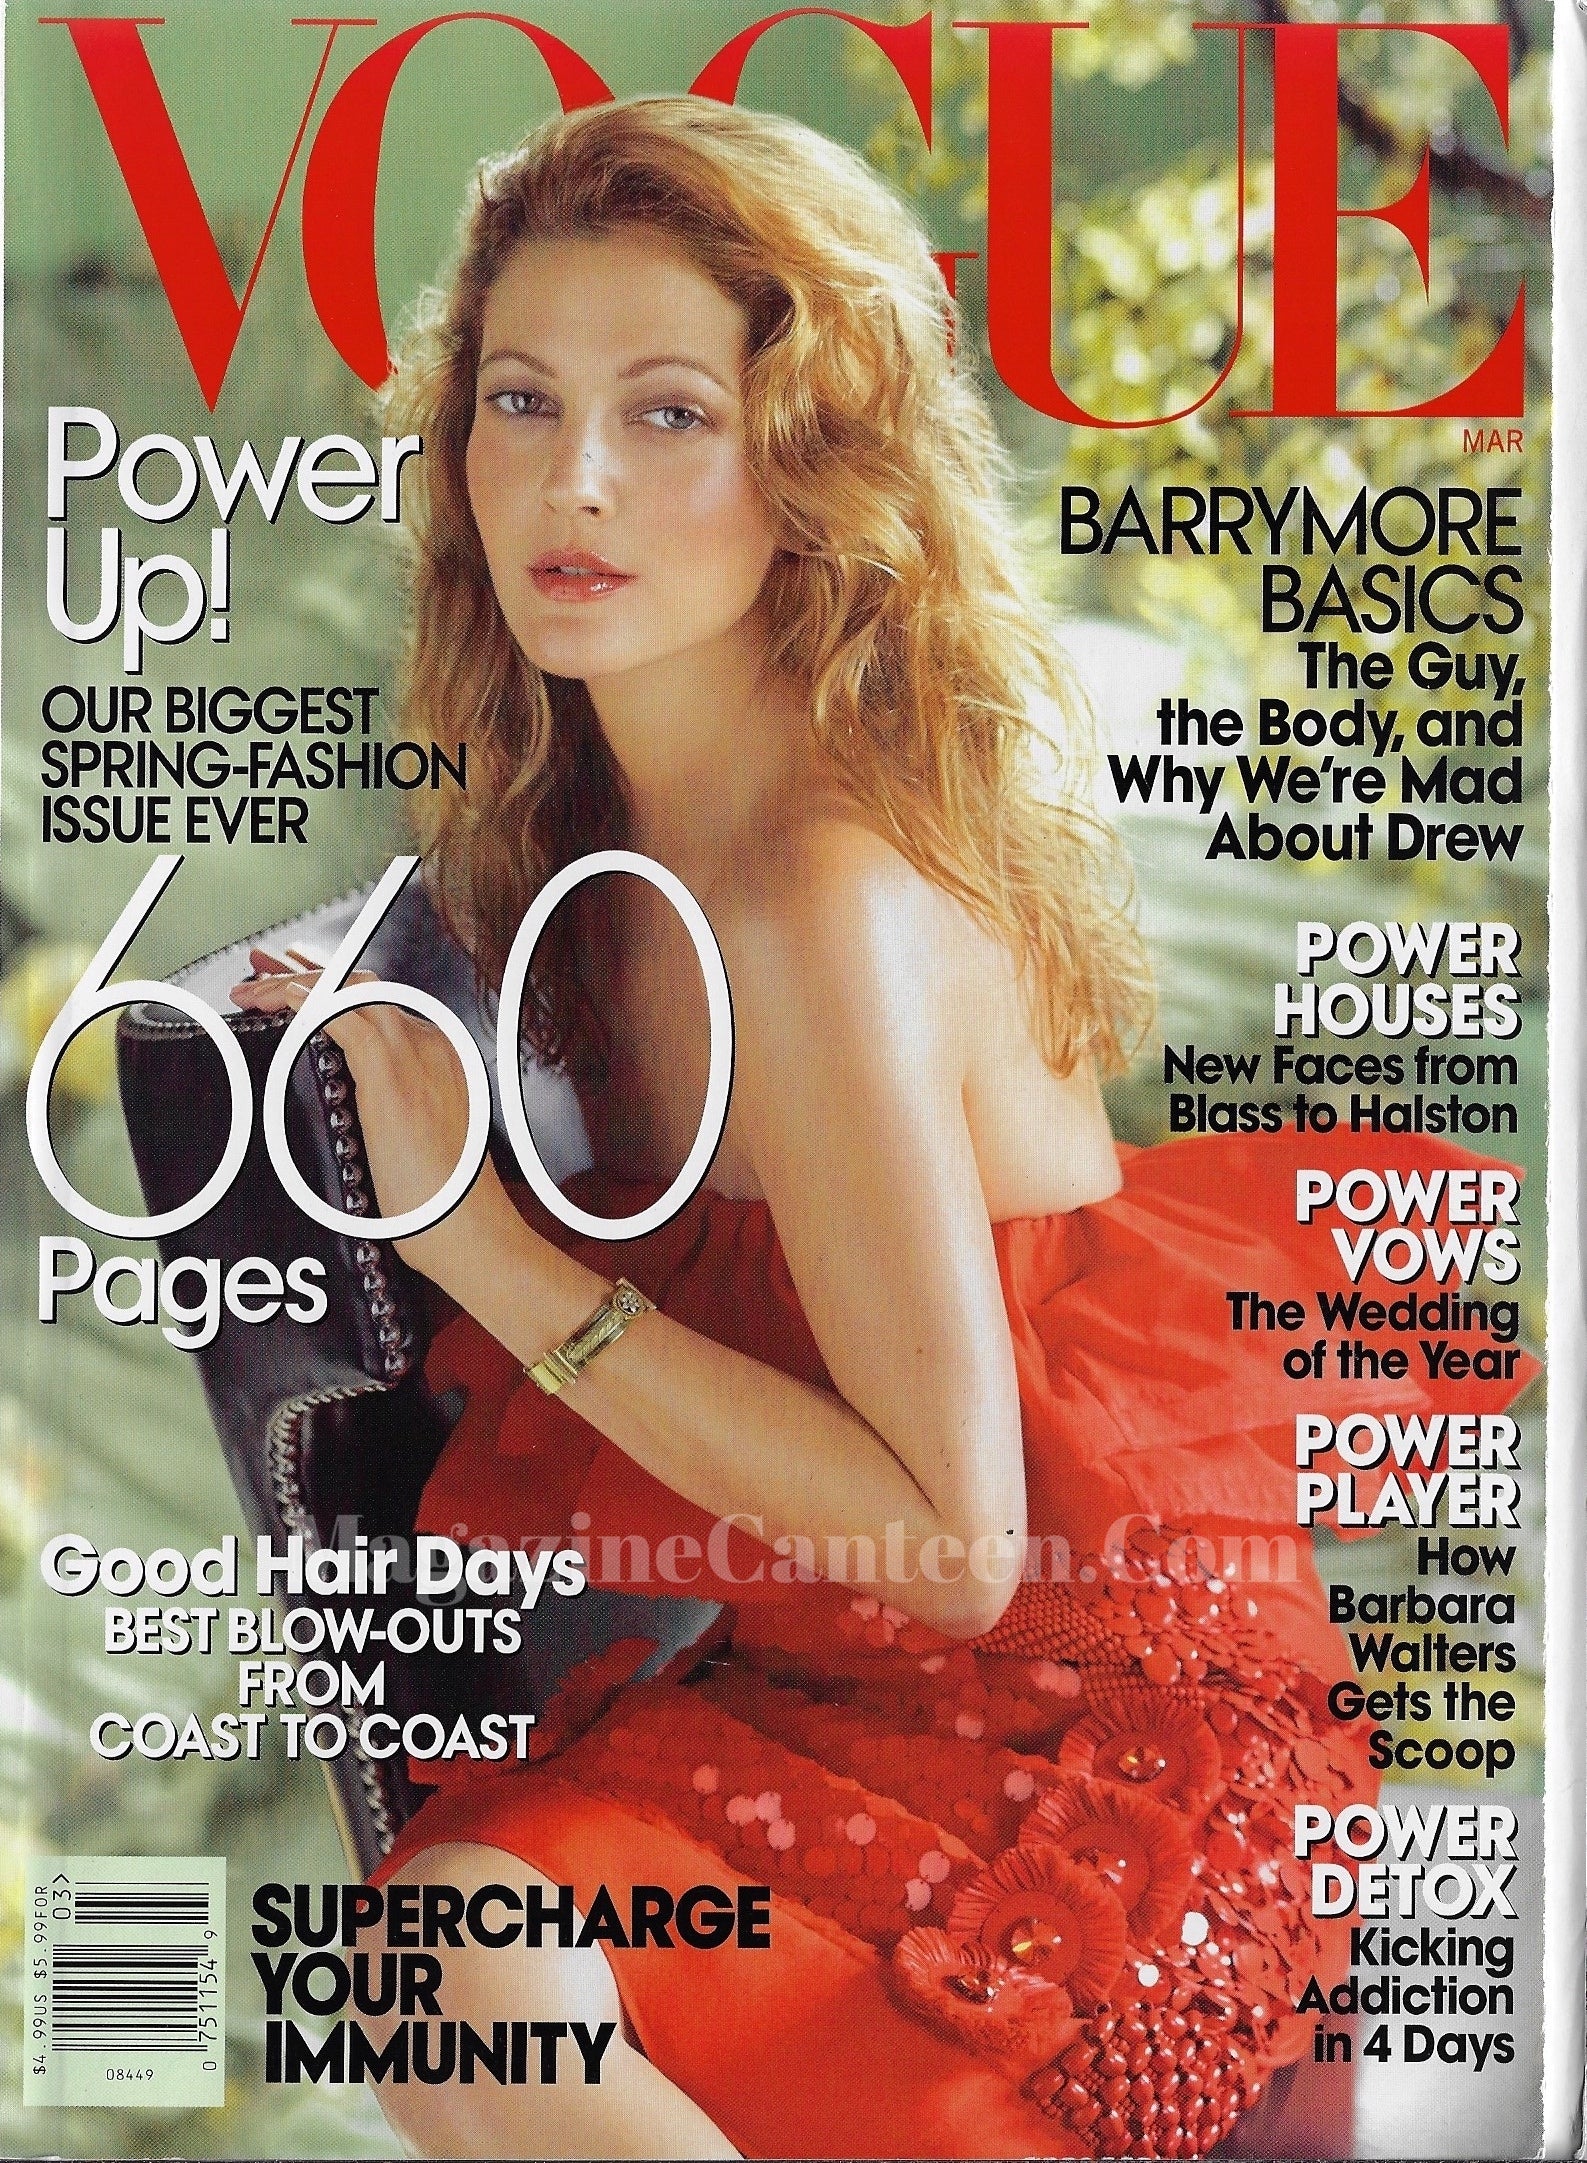 Vogue USA Magazine March 2008 - Drew Barrymore